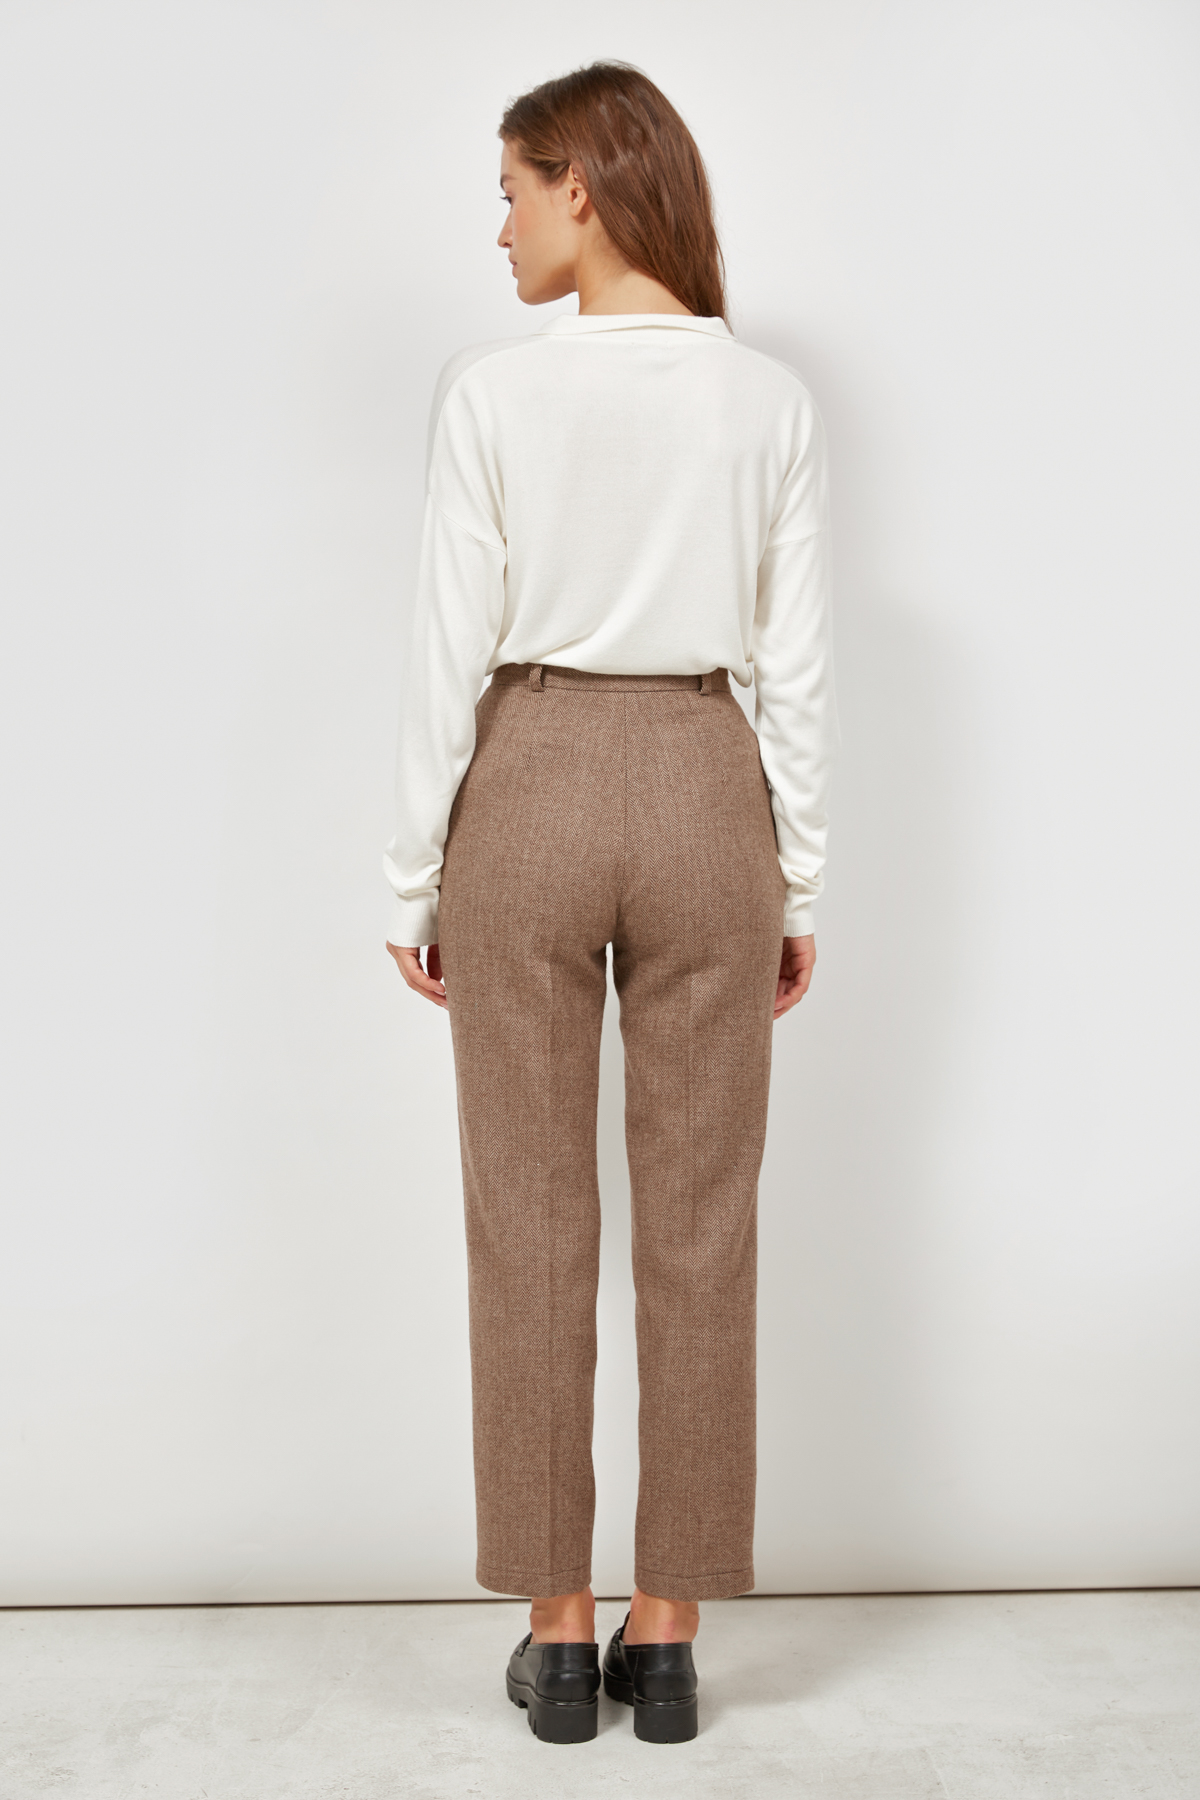 Cropped trousers with wool in brown herringbone print, photo 4